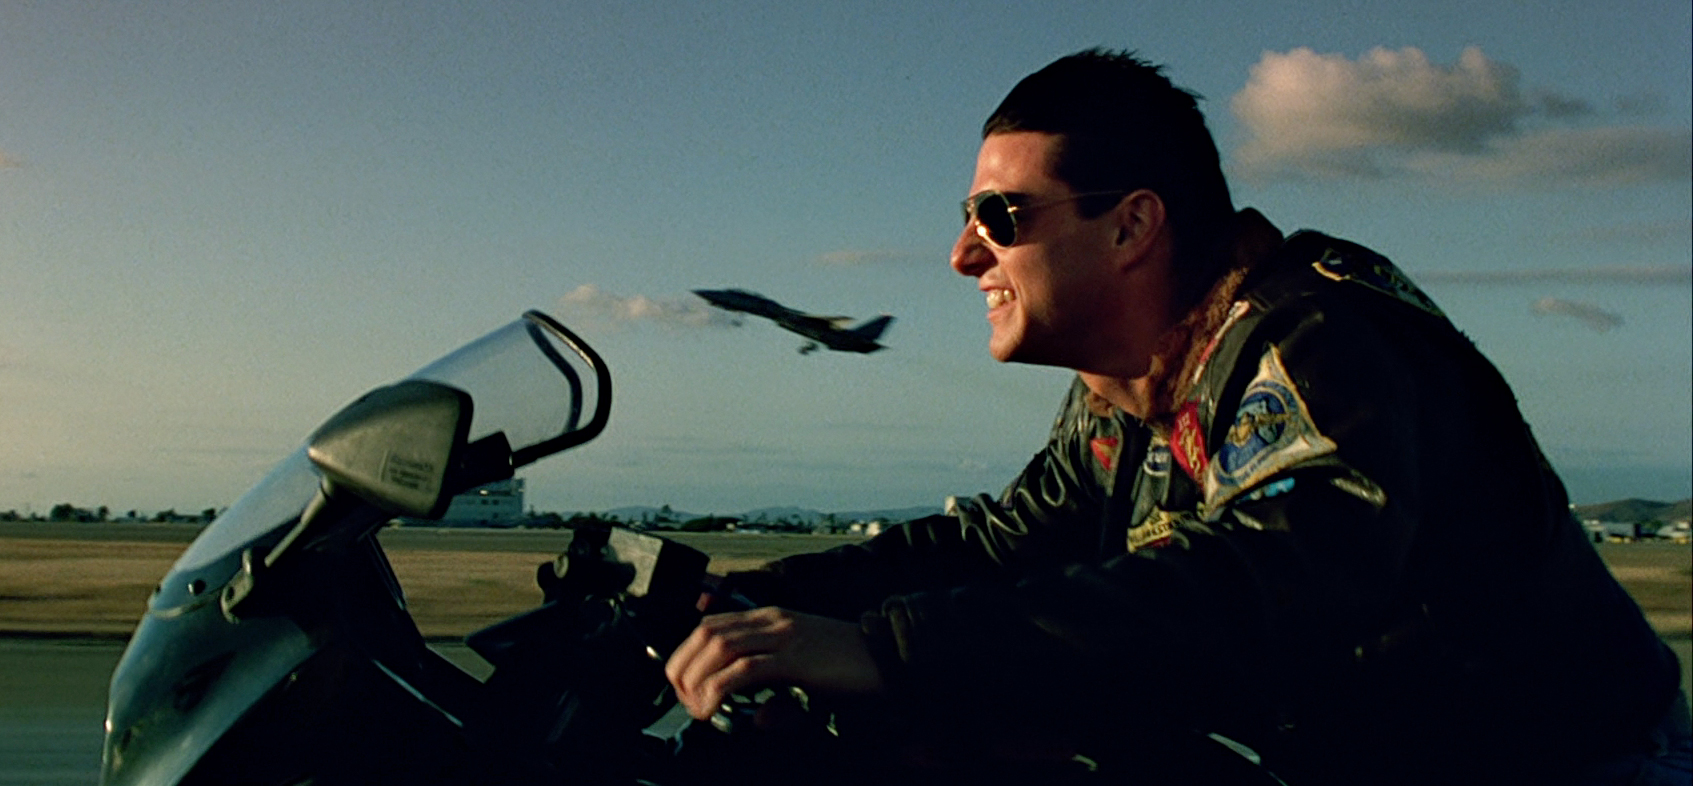 Joseph Kosinski May Direct Tom Cruise in Top Gun 2